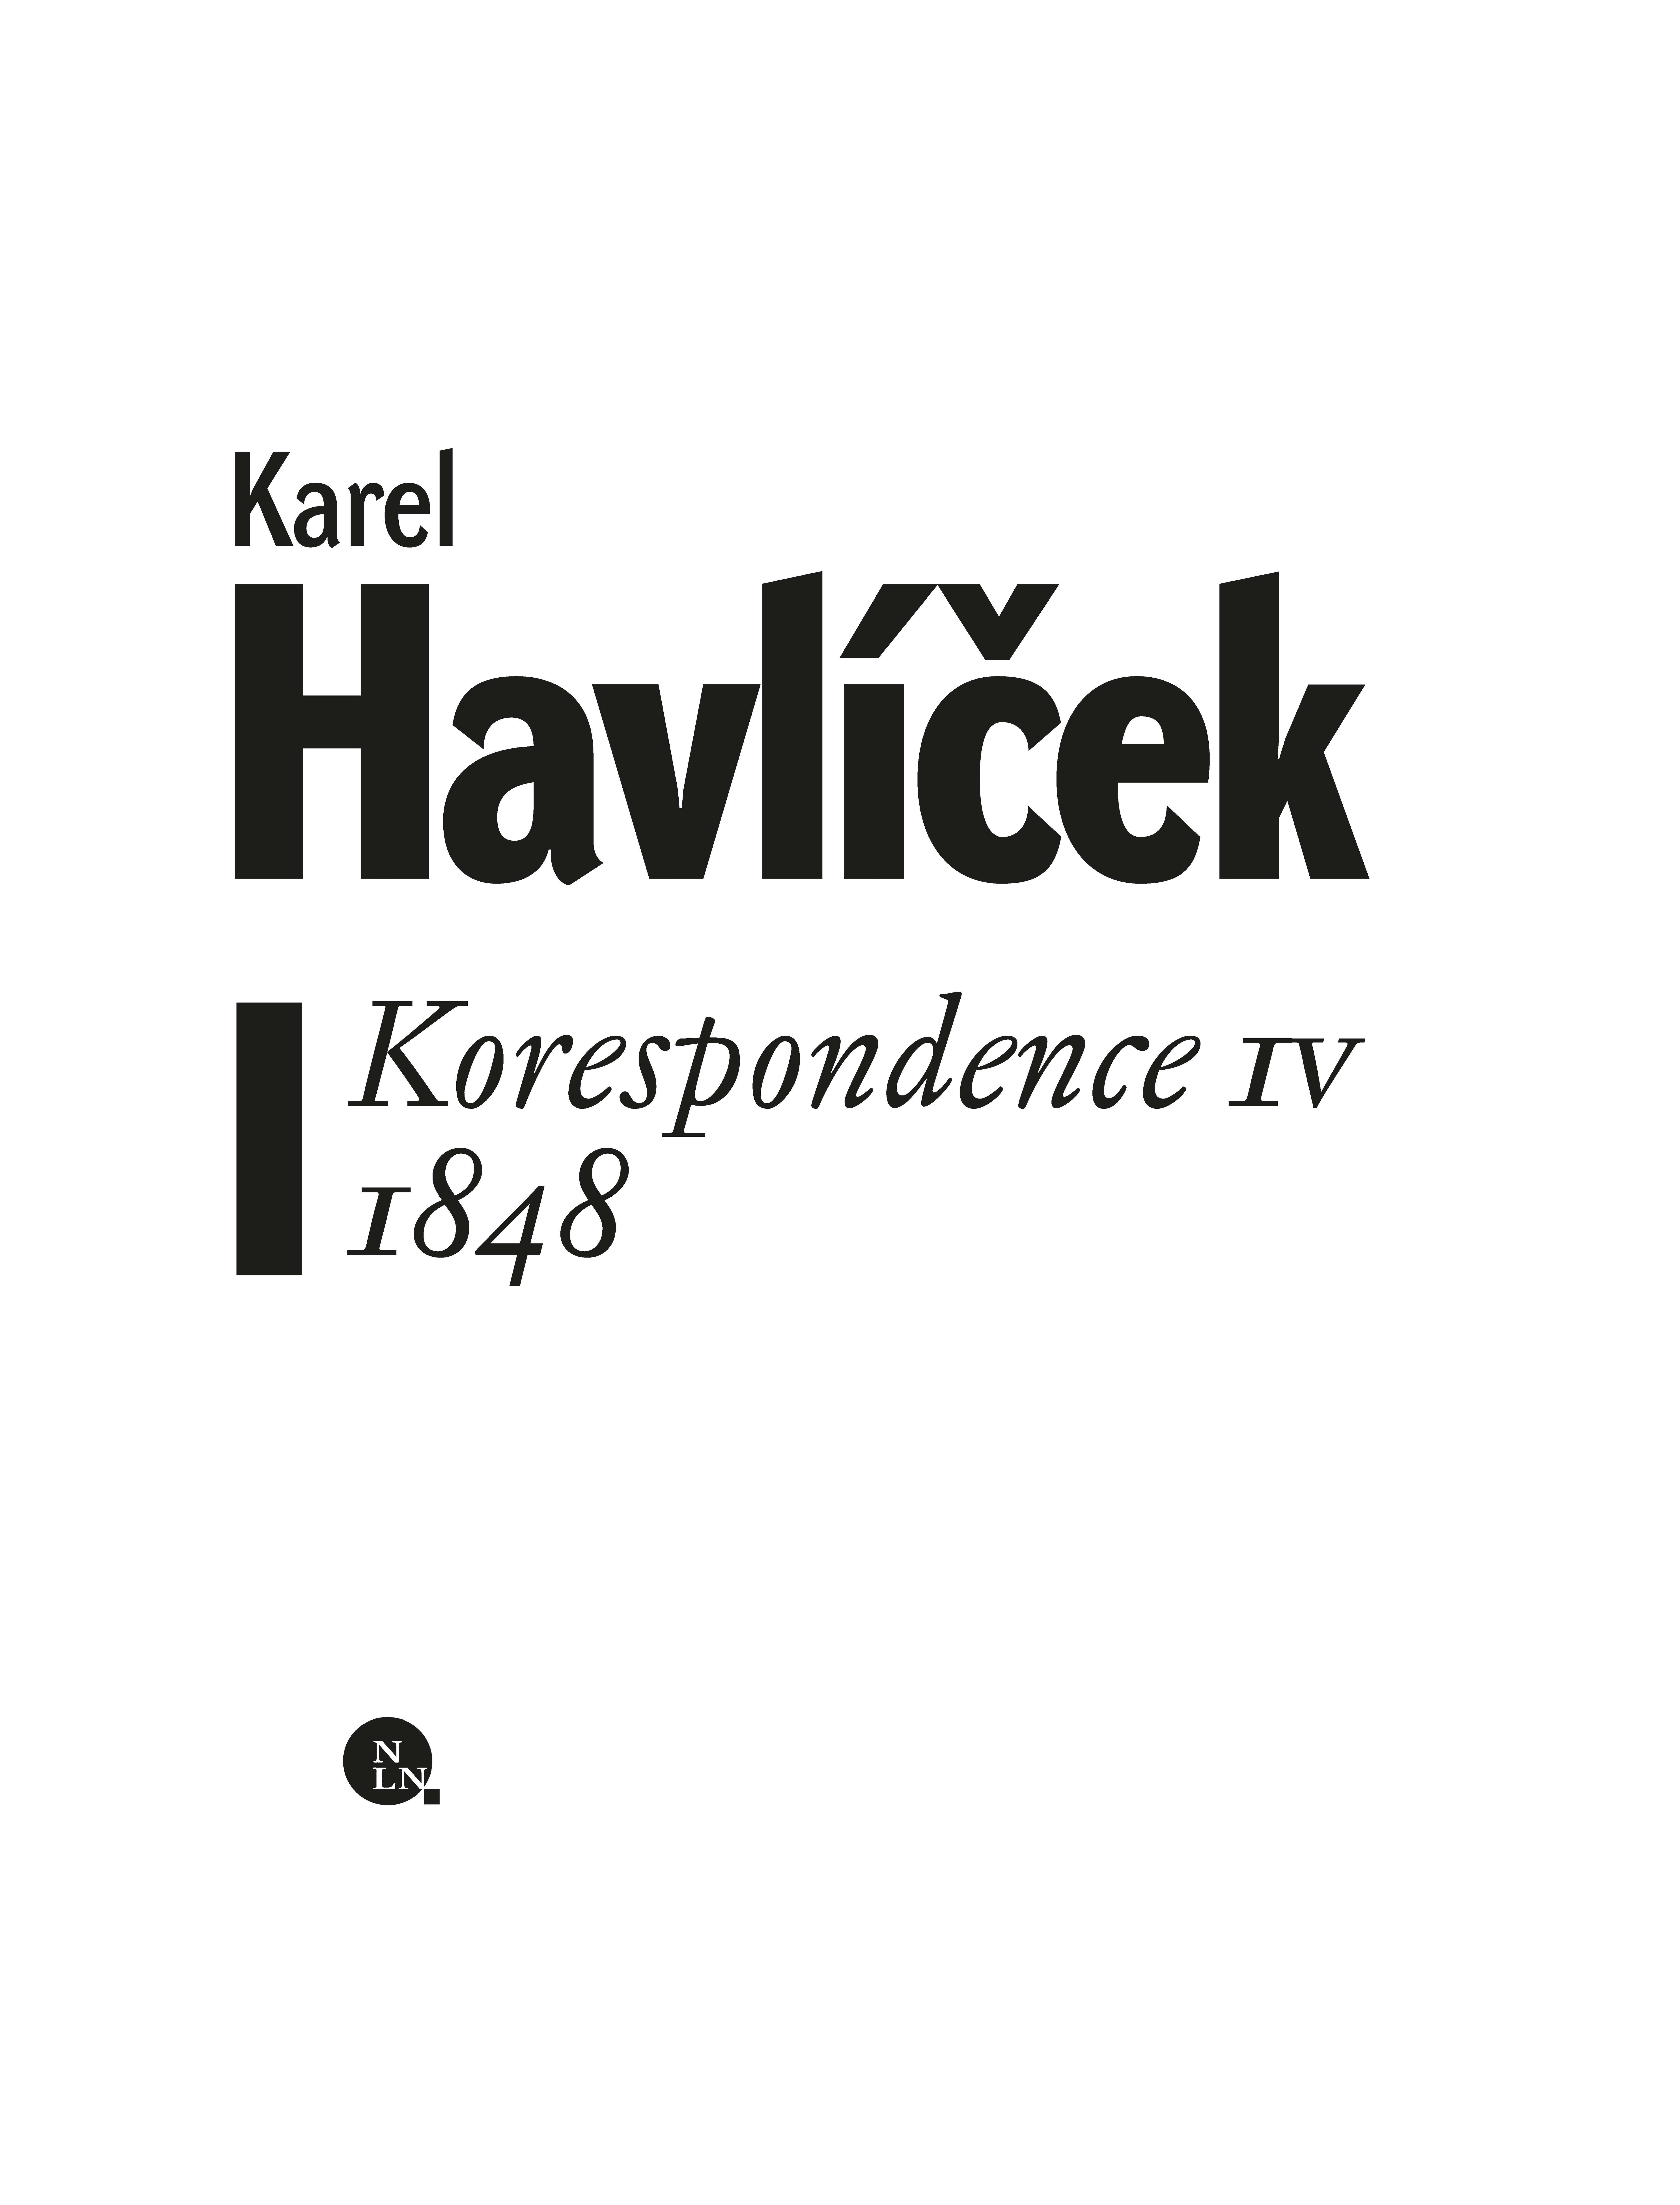 Karel Havlíček. Korespondence IV ukázka-1